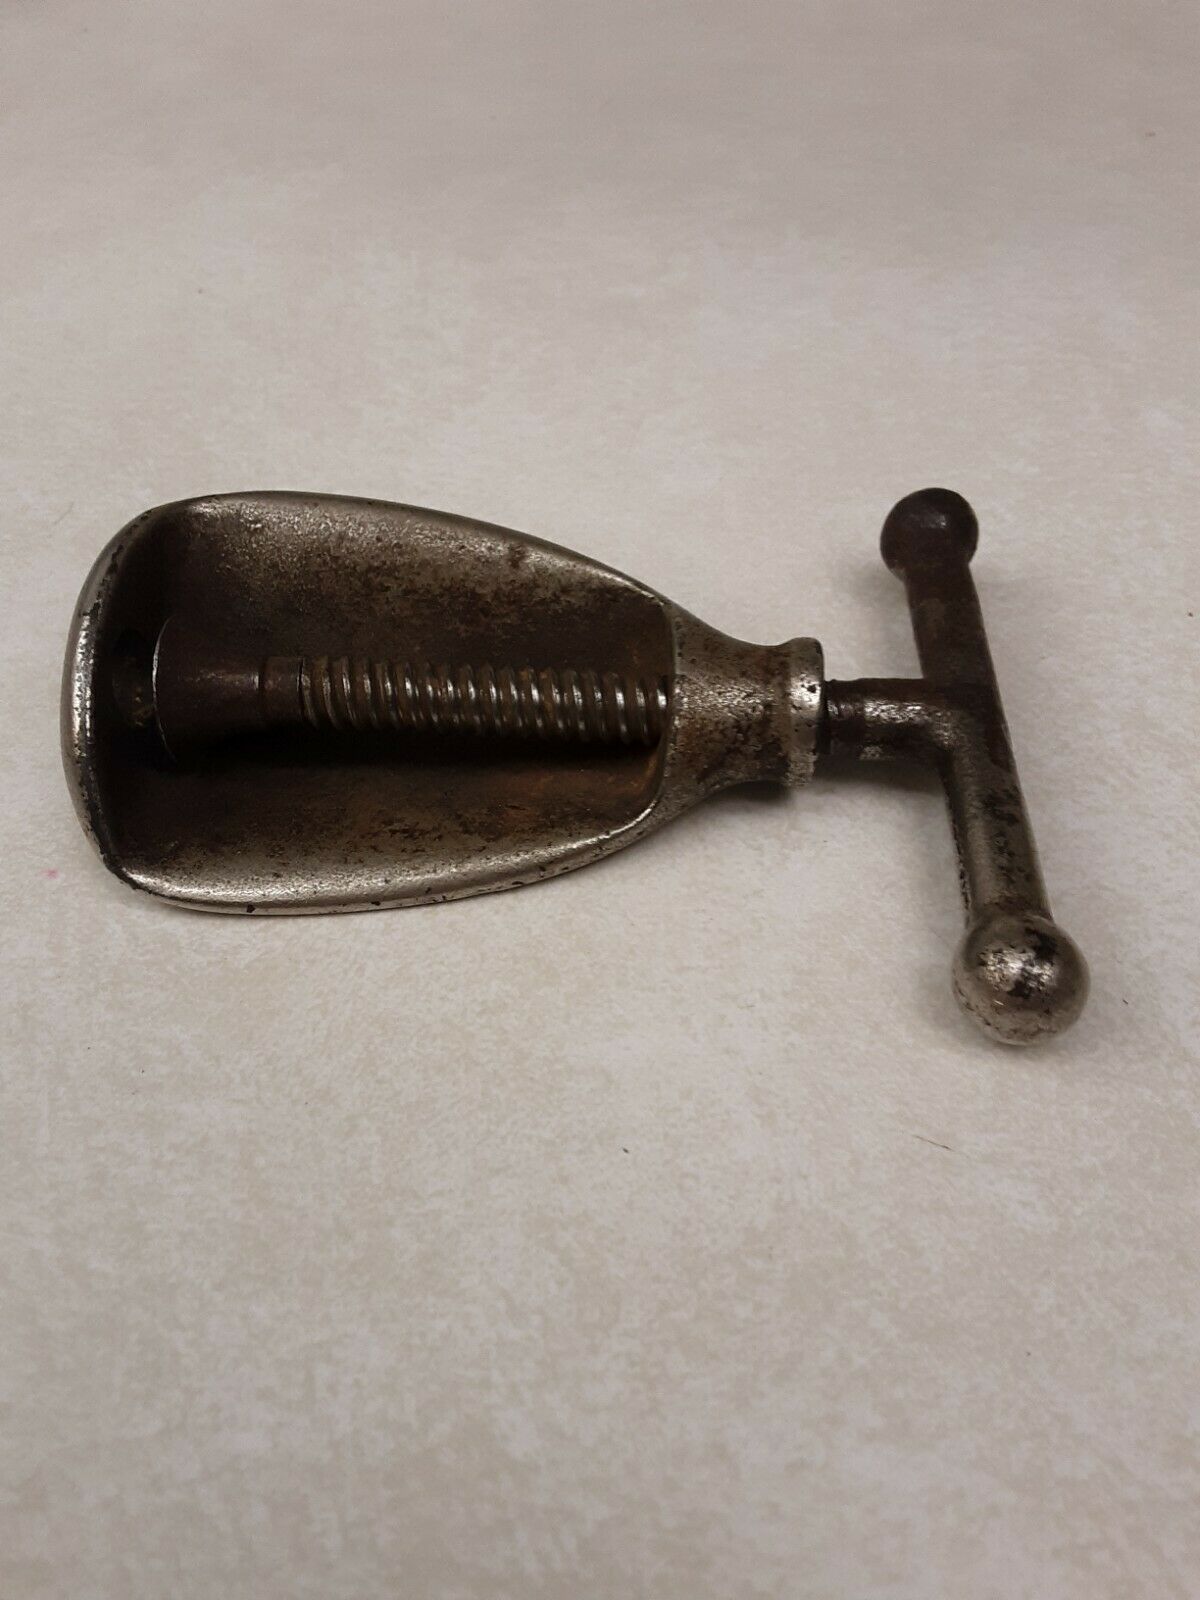 Metal Threaded Screw Press Nutcracker Vintage Unbranded